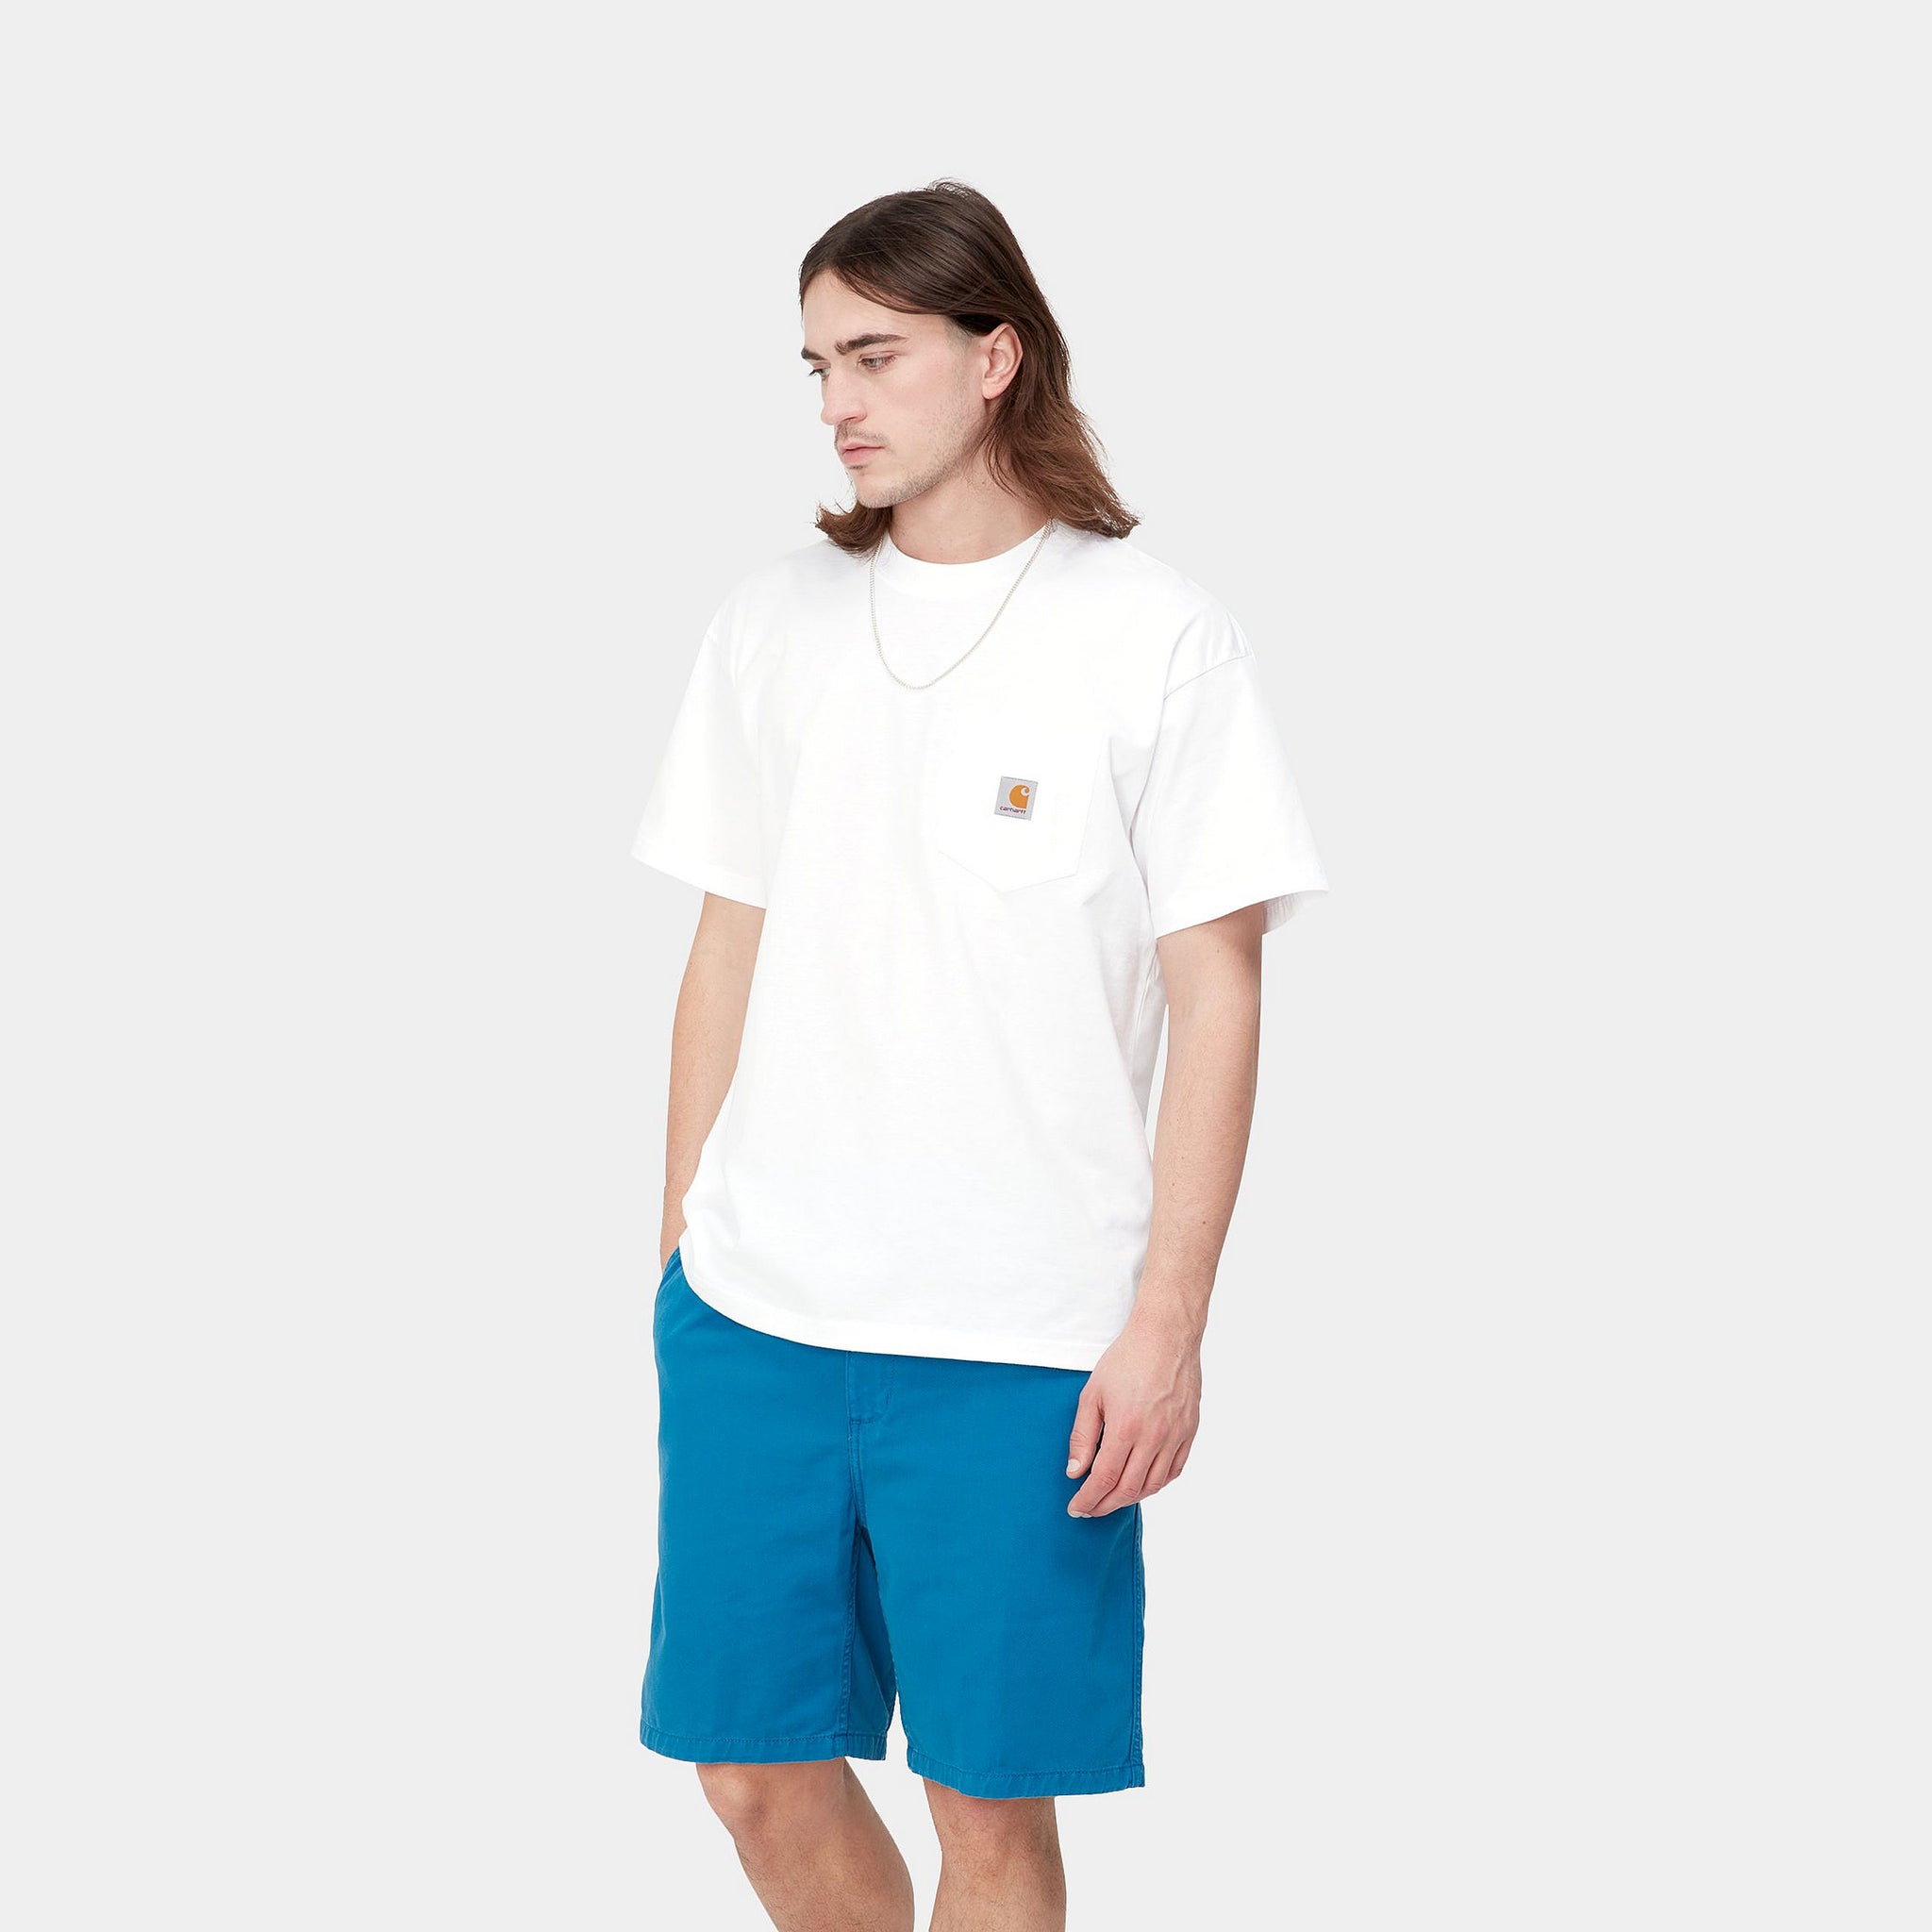 S/S Tamas Pocket T-Shirt Organic Cotton Single Jersey, 175 g/m² (White)